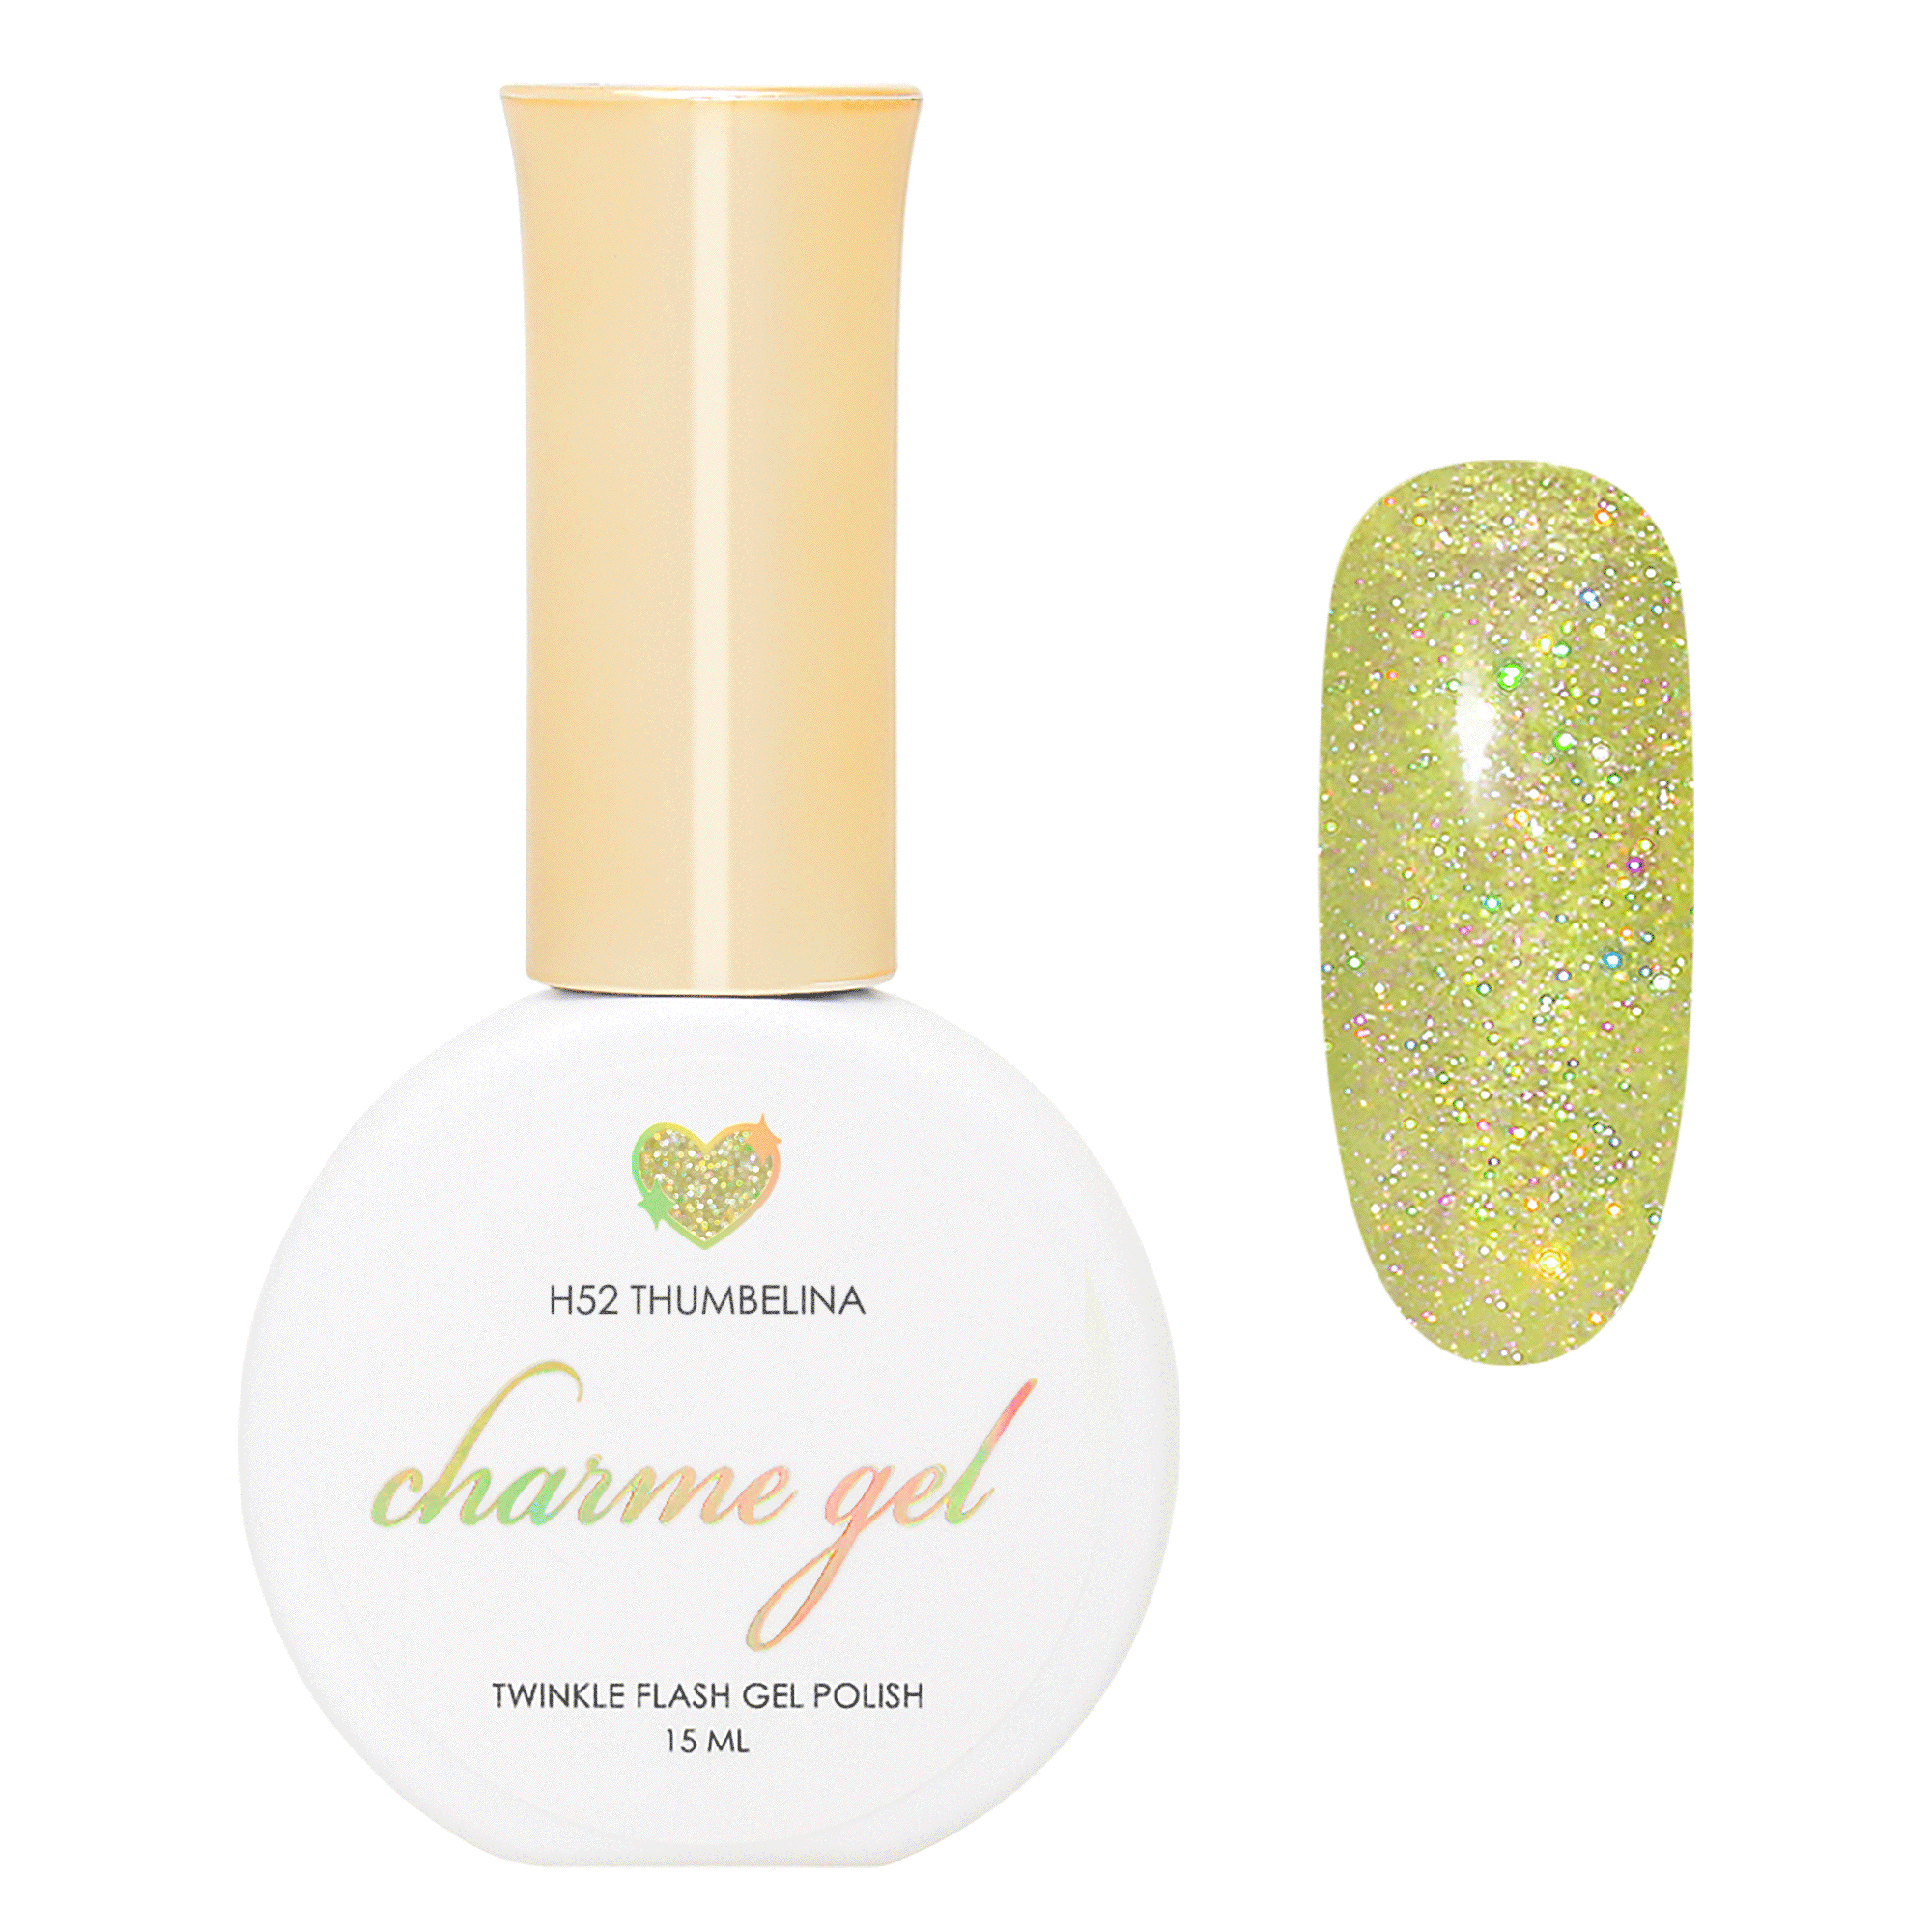 Charme Gel / Holographic Twinkle H52 Thumbelina Yellow Lime Green Reflective Polish